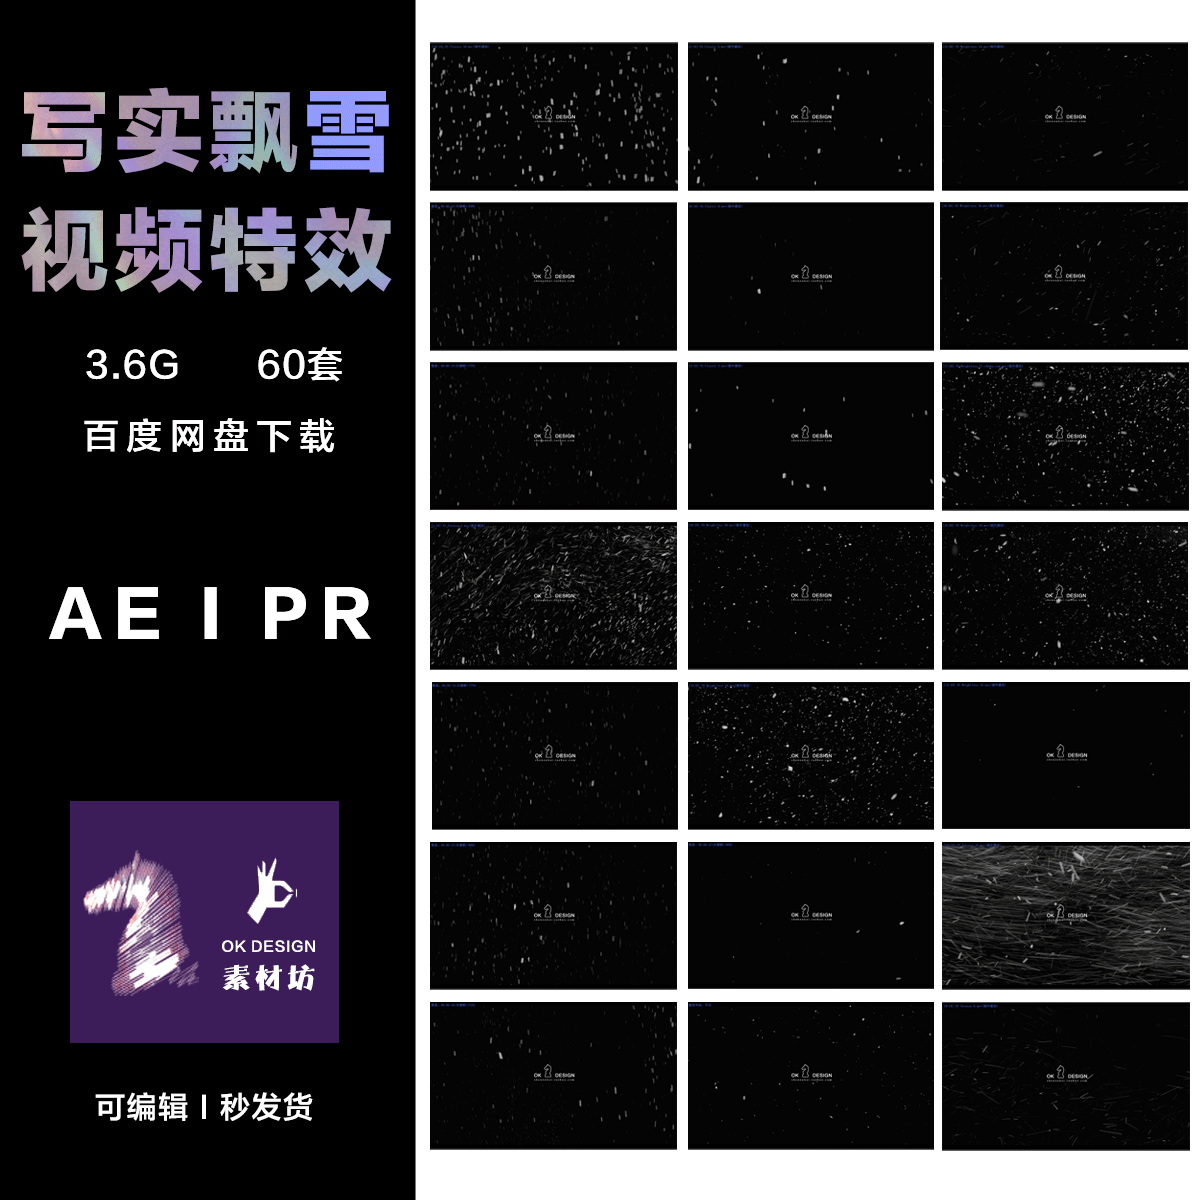 AE I PR特效视频 黑色背景 真实写实飘雪雪景 各式设计叠加元素